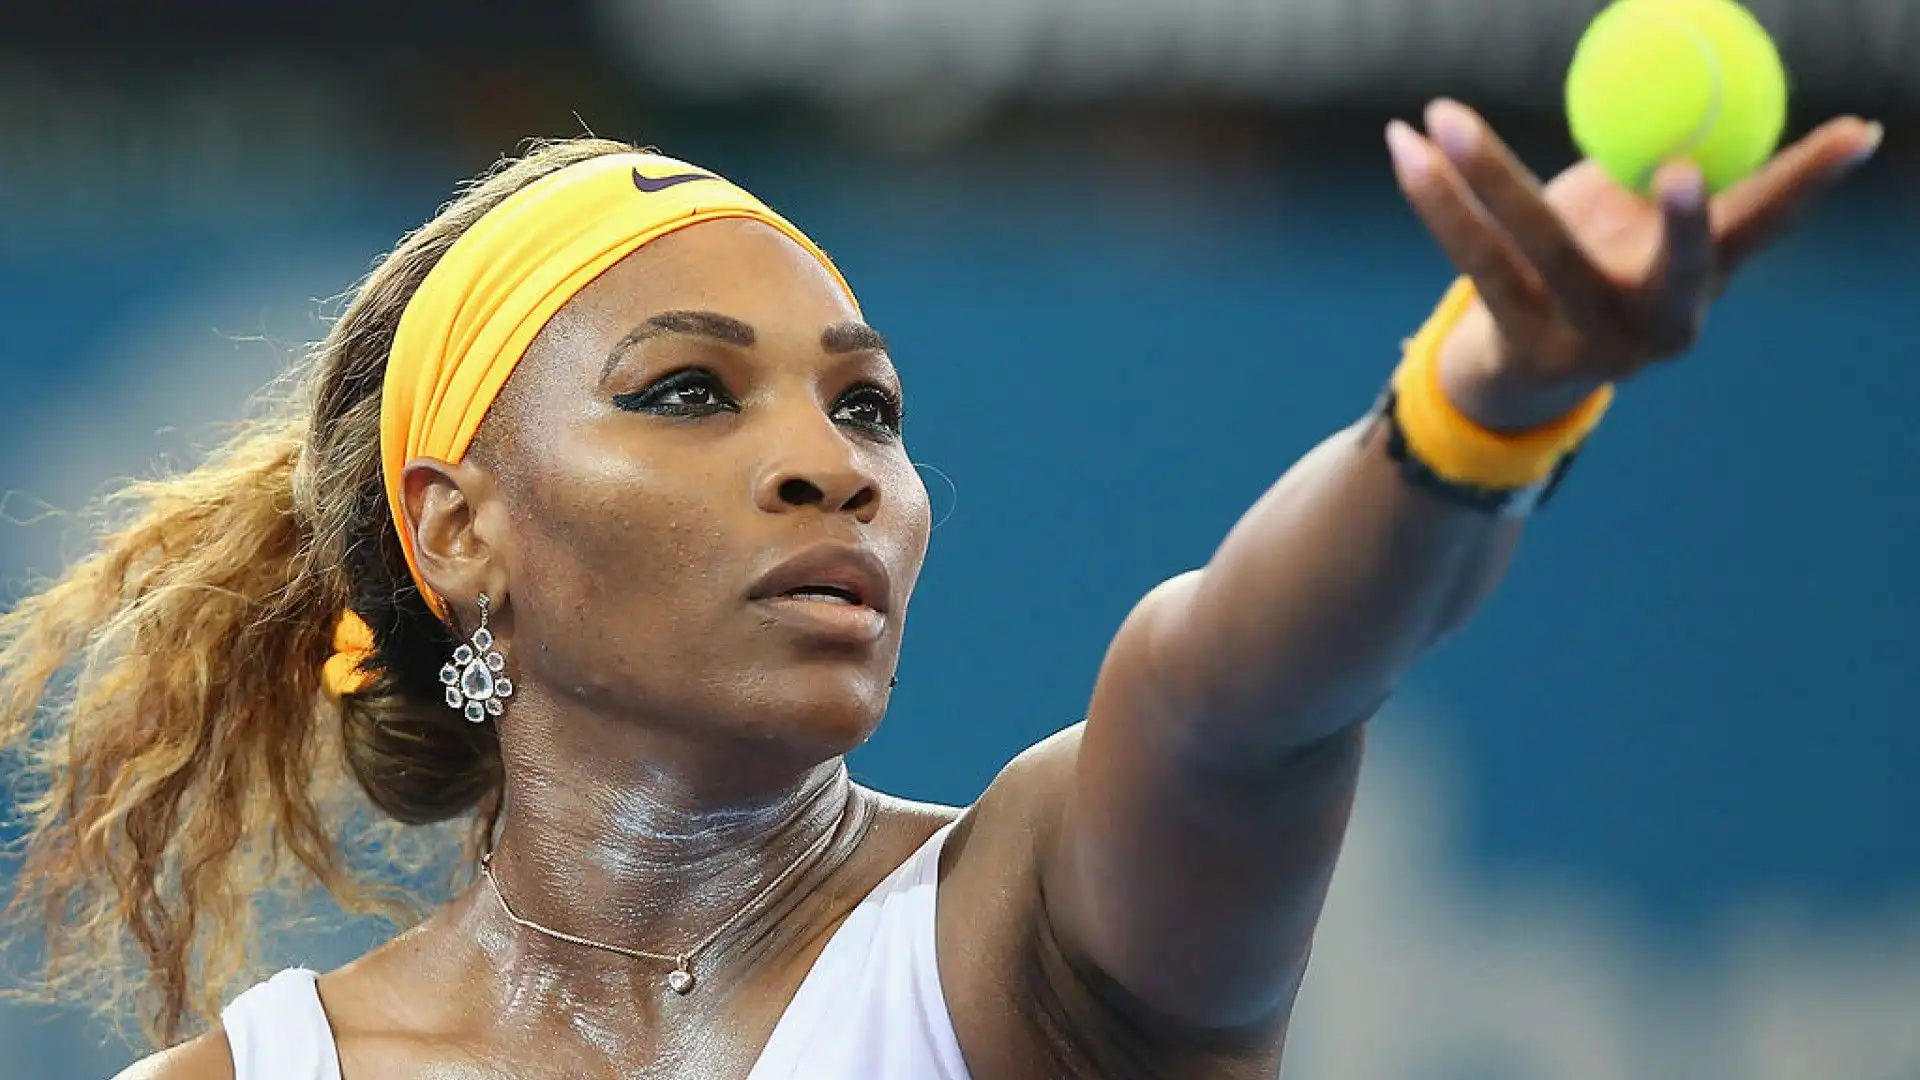 4- Serena Williams